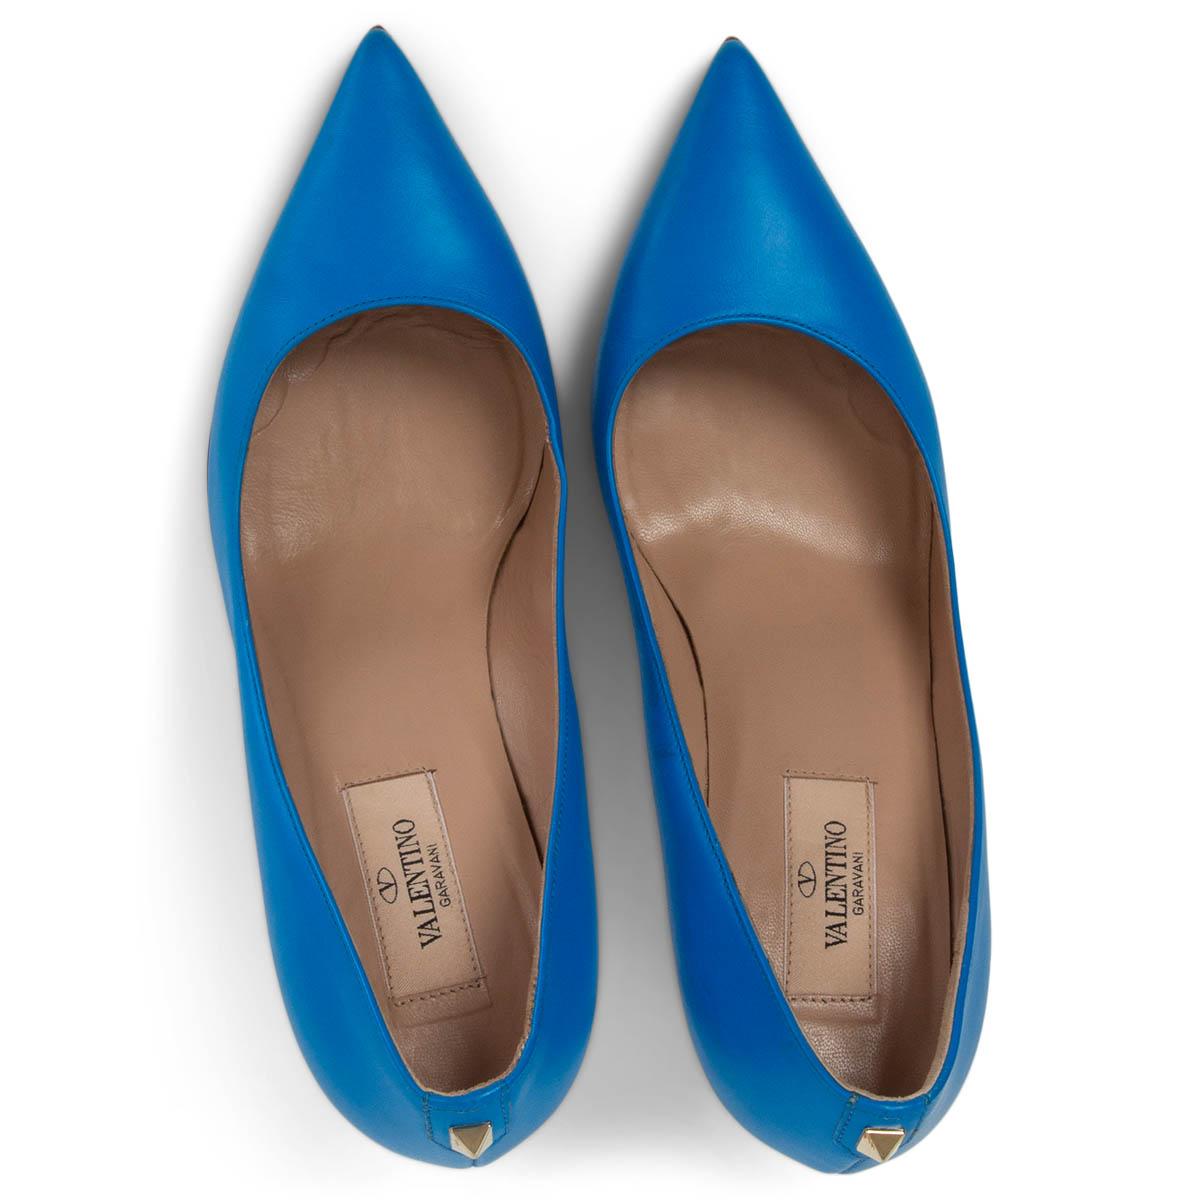 cyan blue shoes